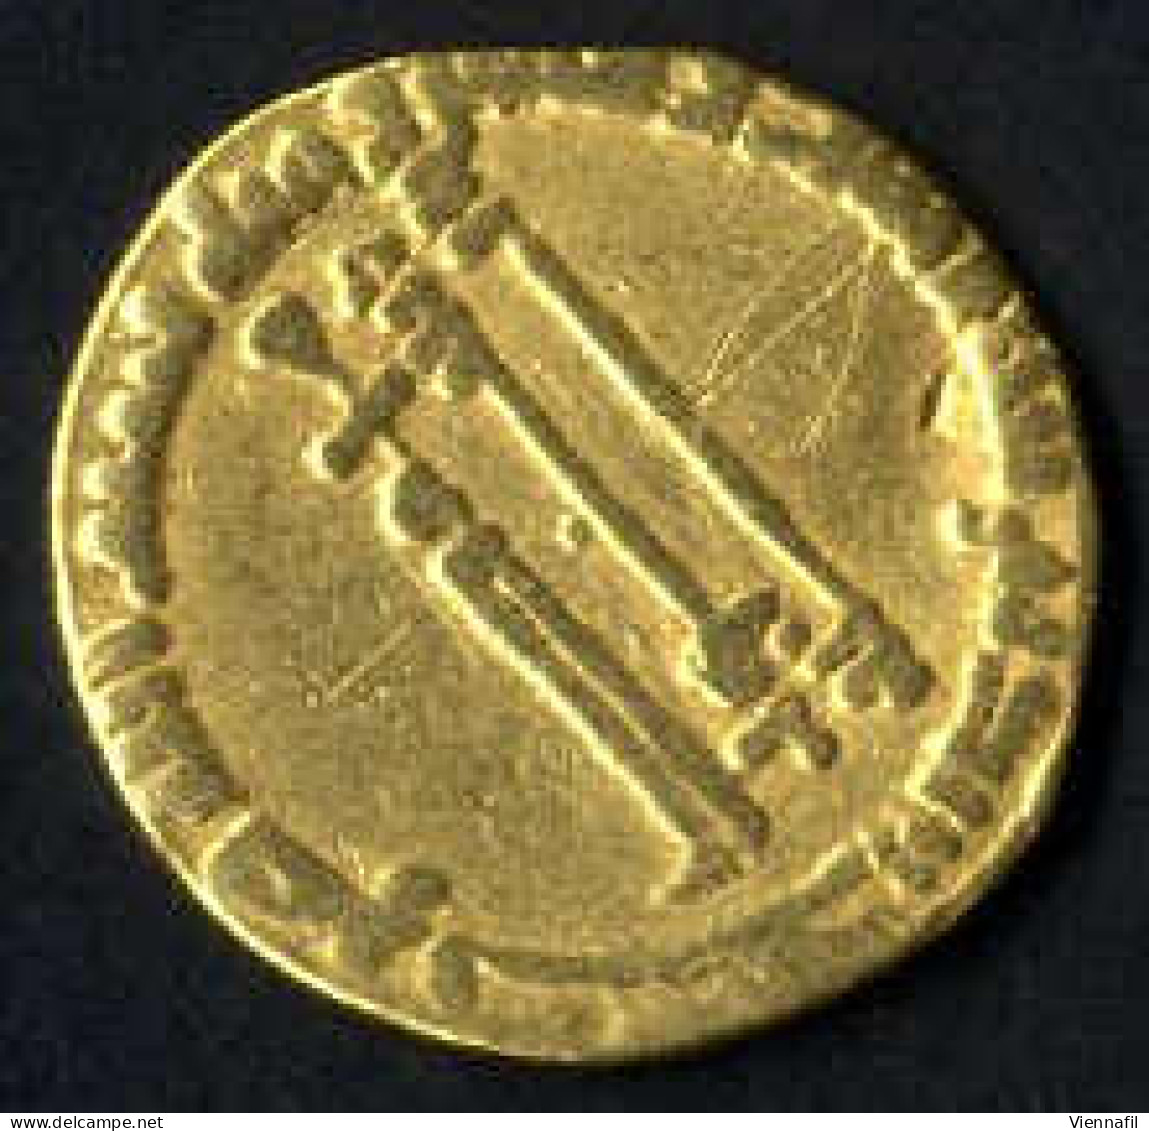 Al-Mahdi 158-169AH 775-785, Dinar Gold, 166 Ohne Münzstätte, BMC 88, Sehr Schön - Islamiques